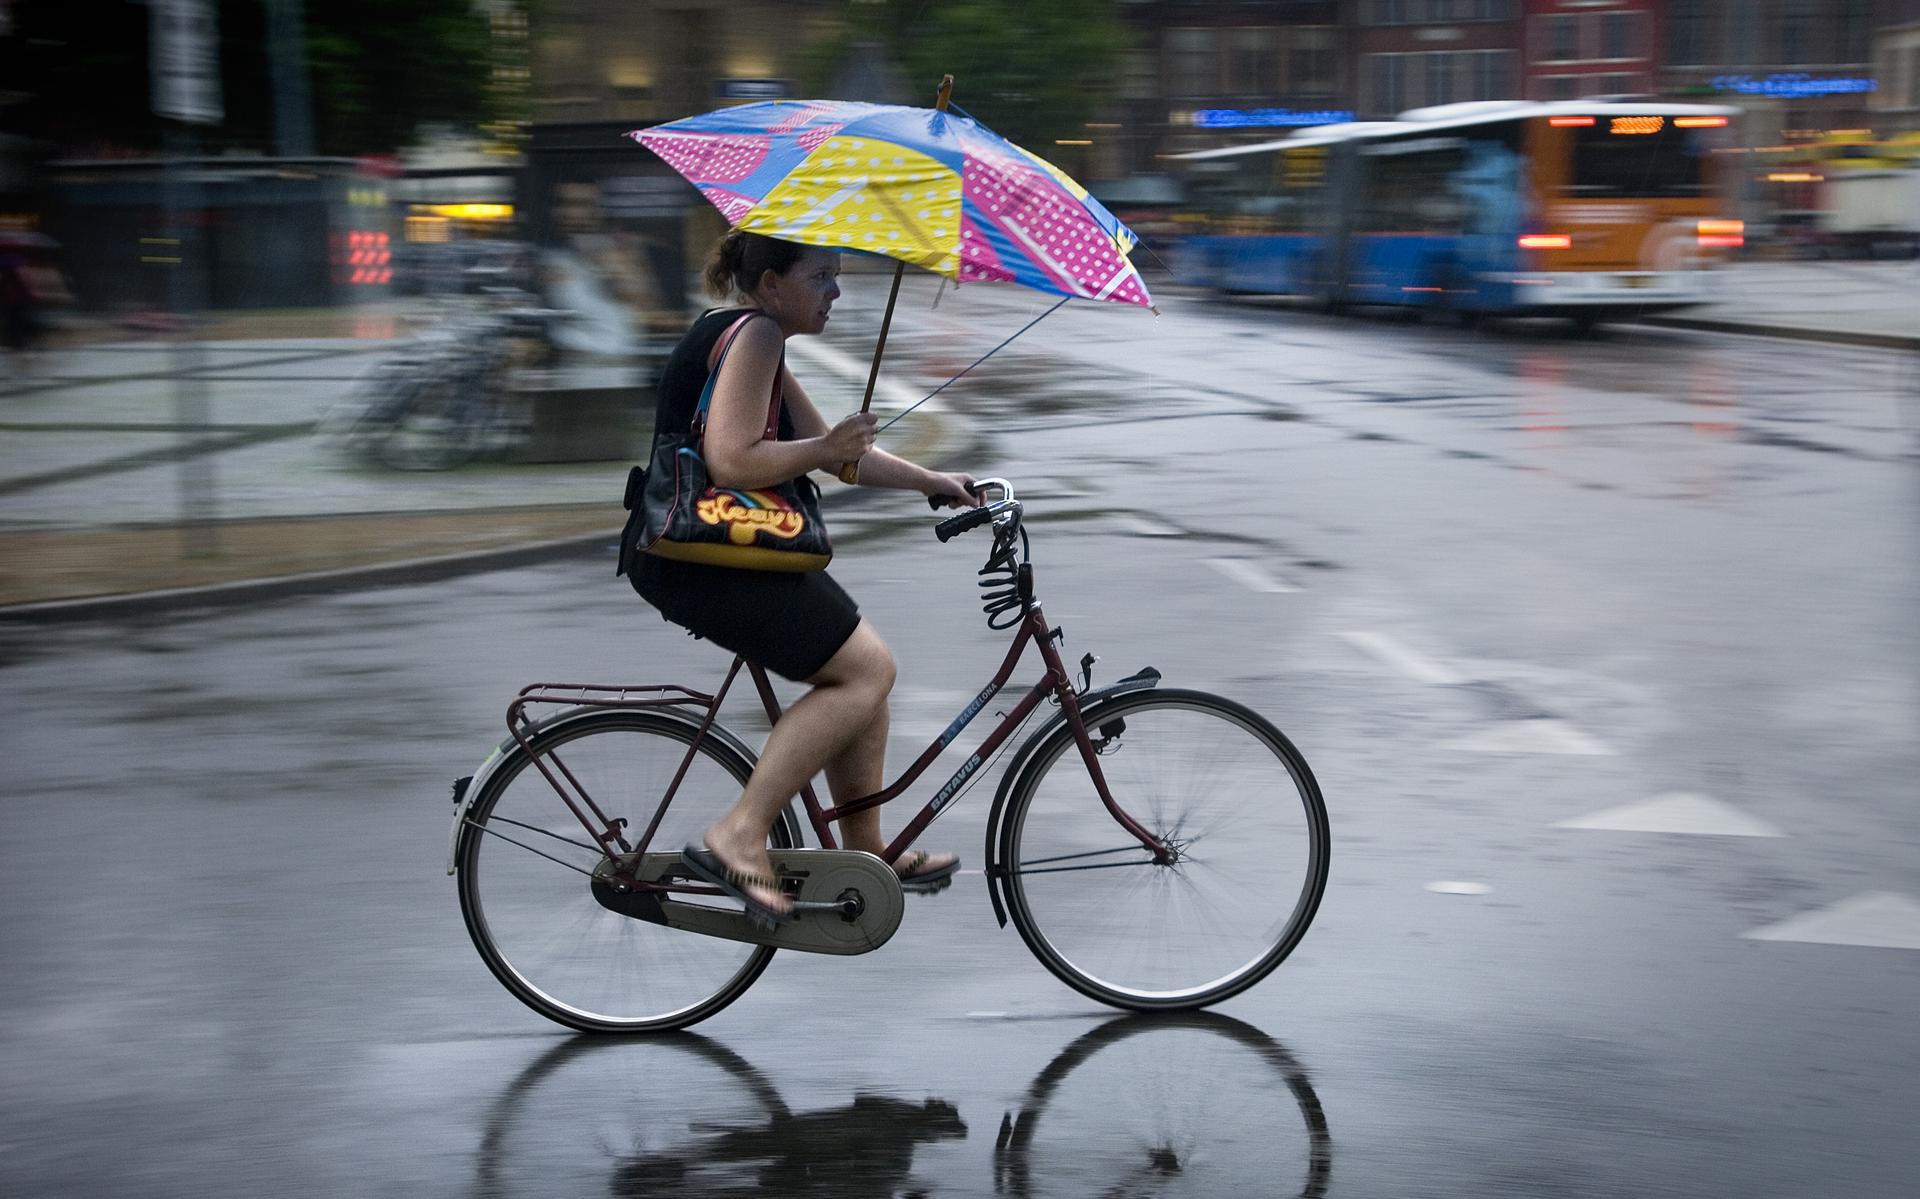 Een fietsster trotseert de regen. Foto: Archief DvhN/Corné Sparidaens